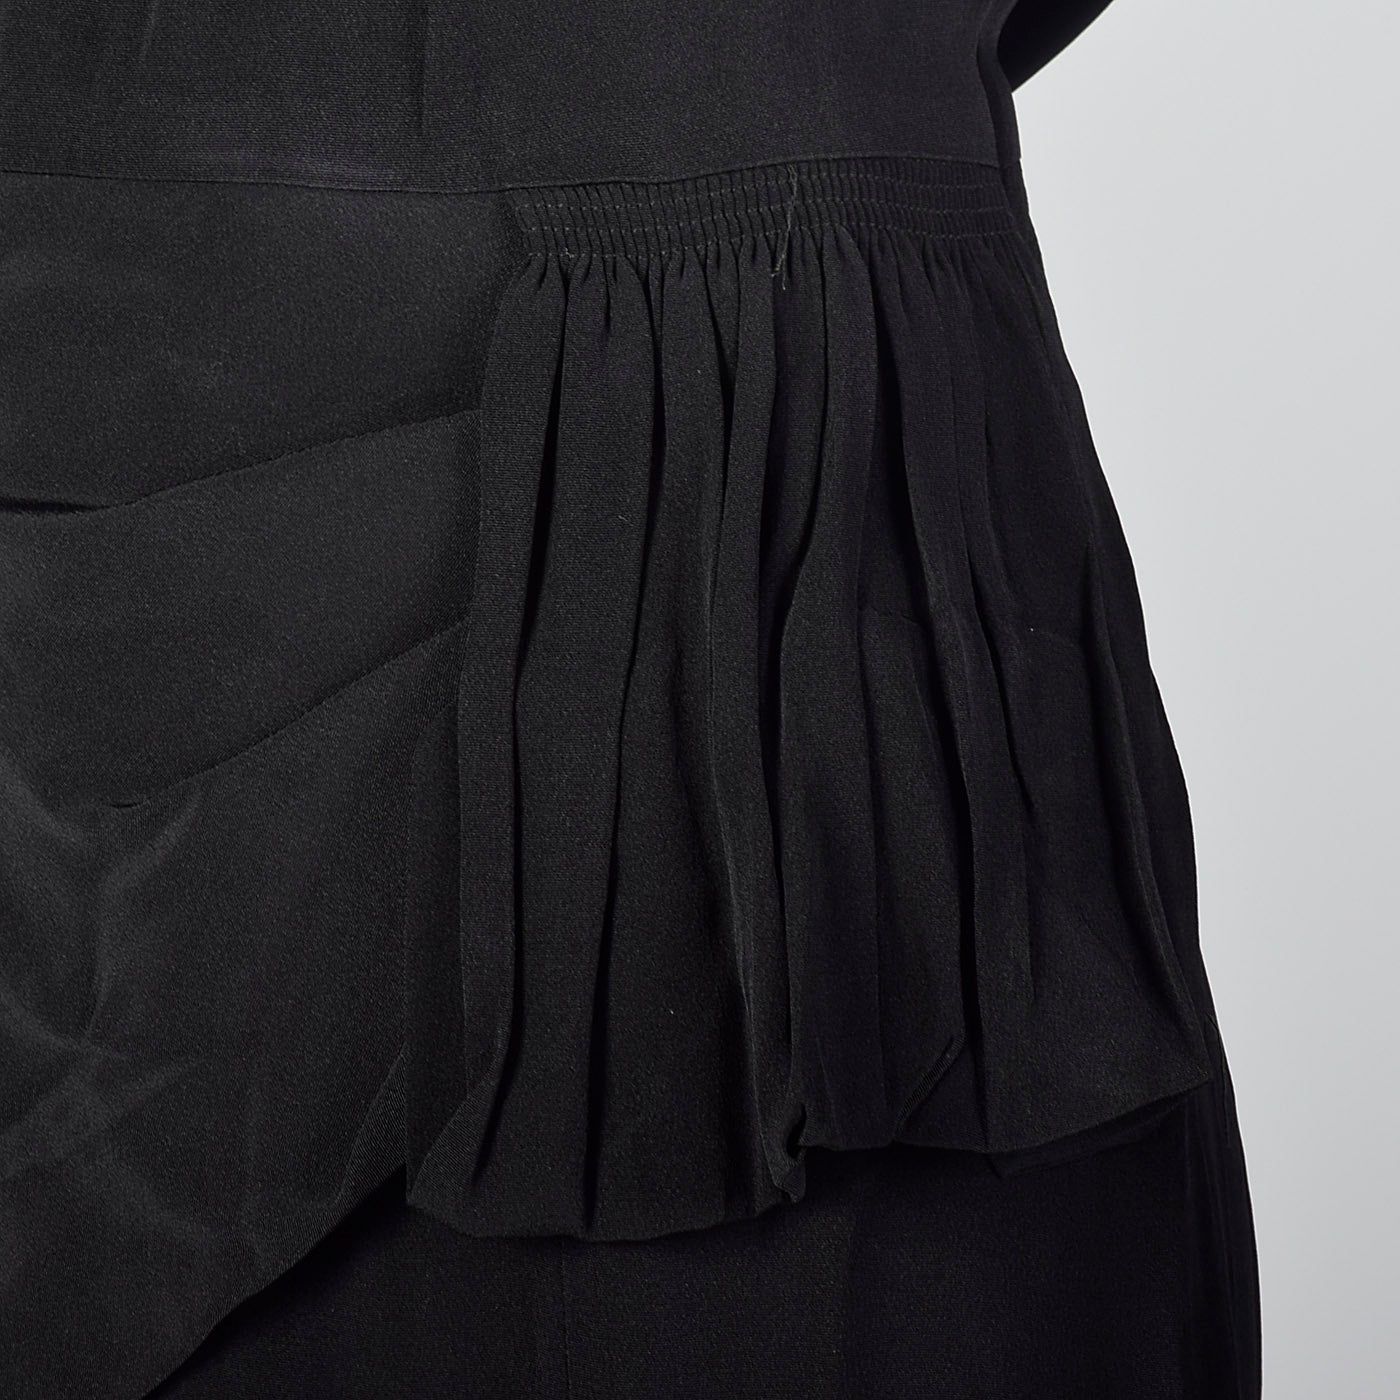 1940s Black Rayon Dress with Beaded Collar